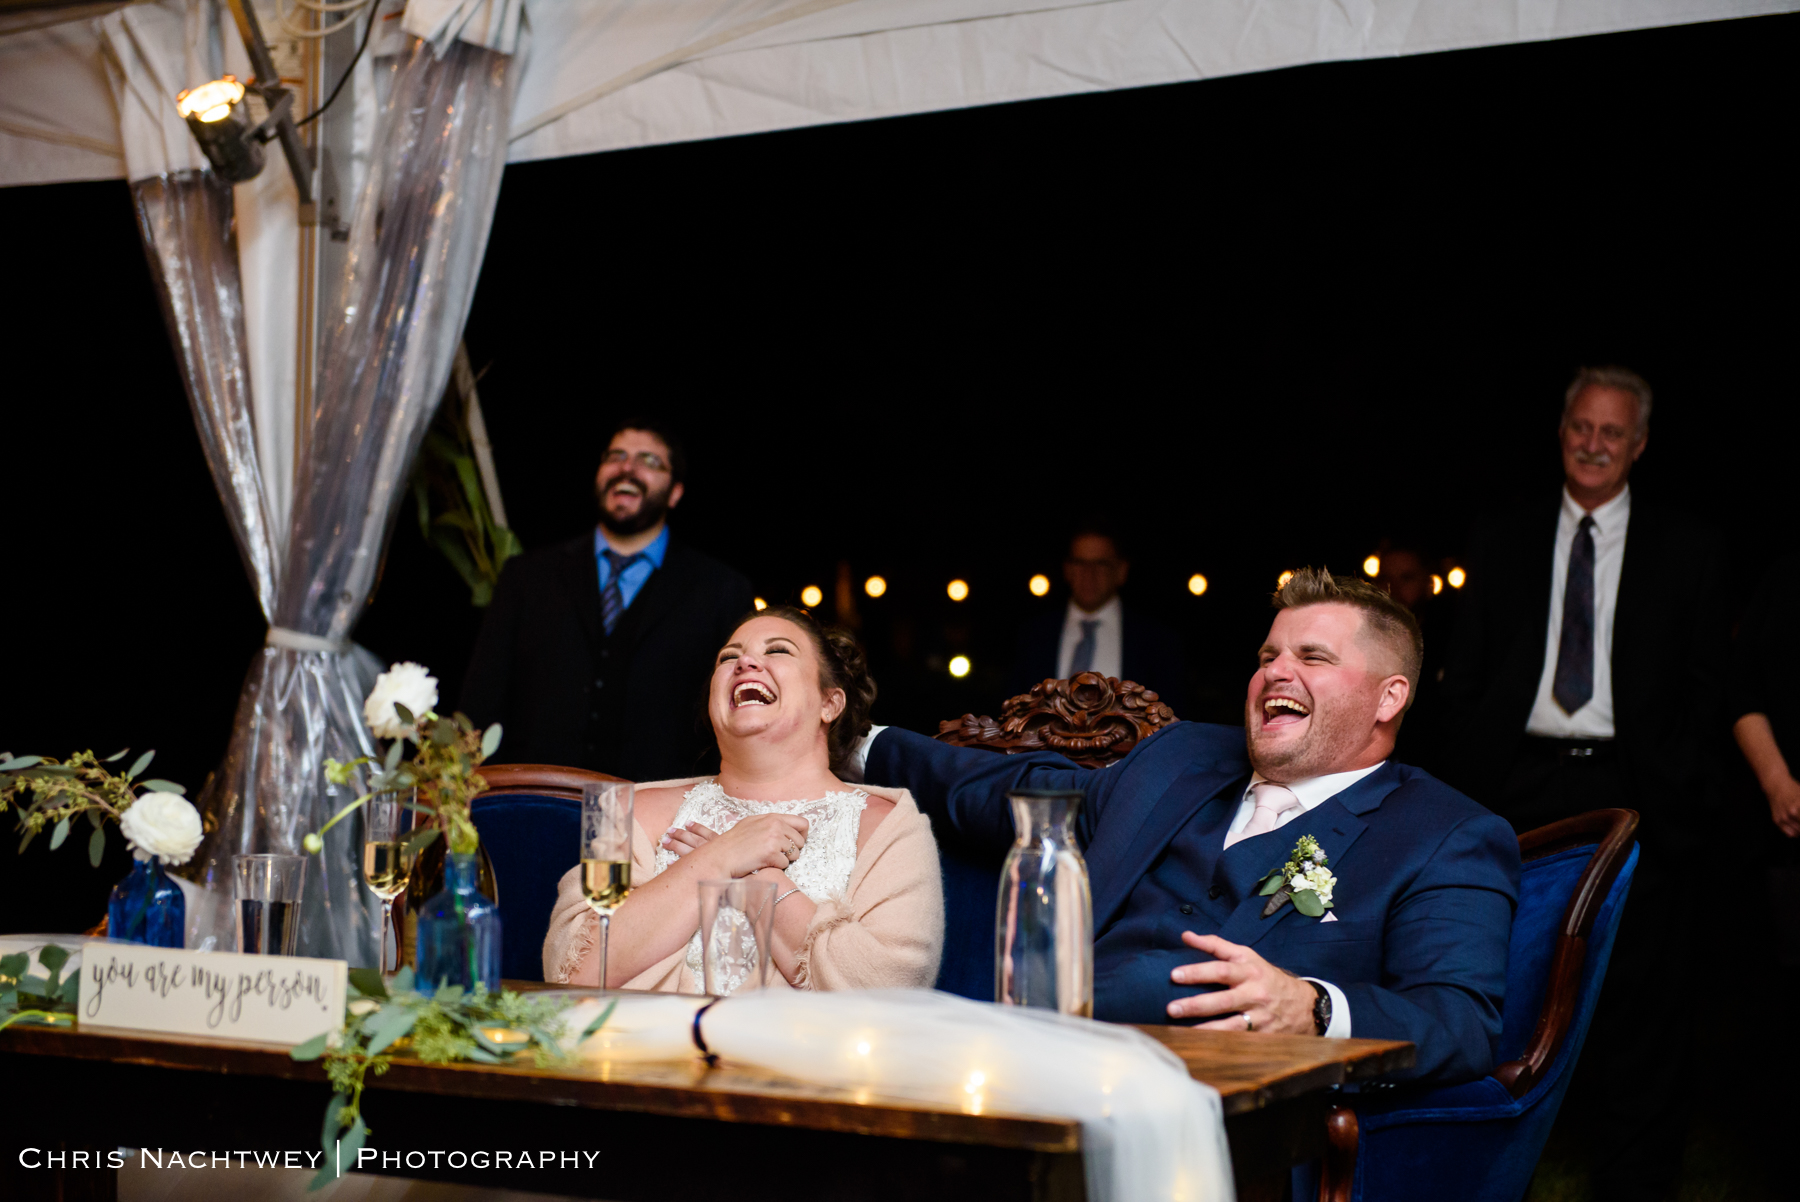 wedding-photographers-connecticut-affordable-chris-nachtwey-photography-2019-25.jpg